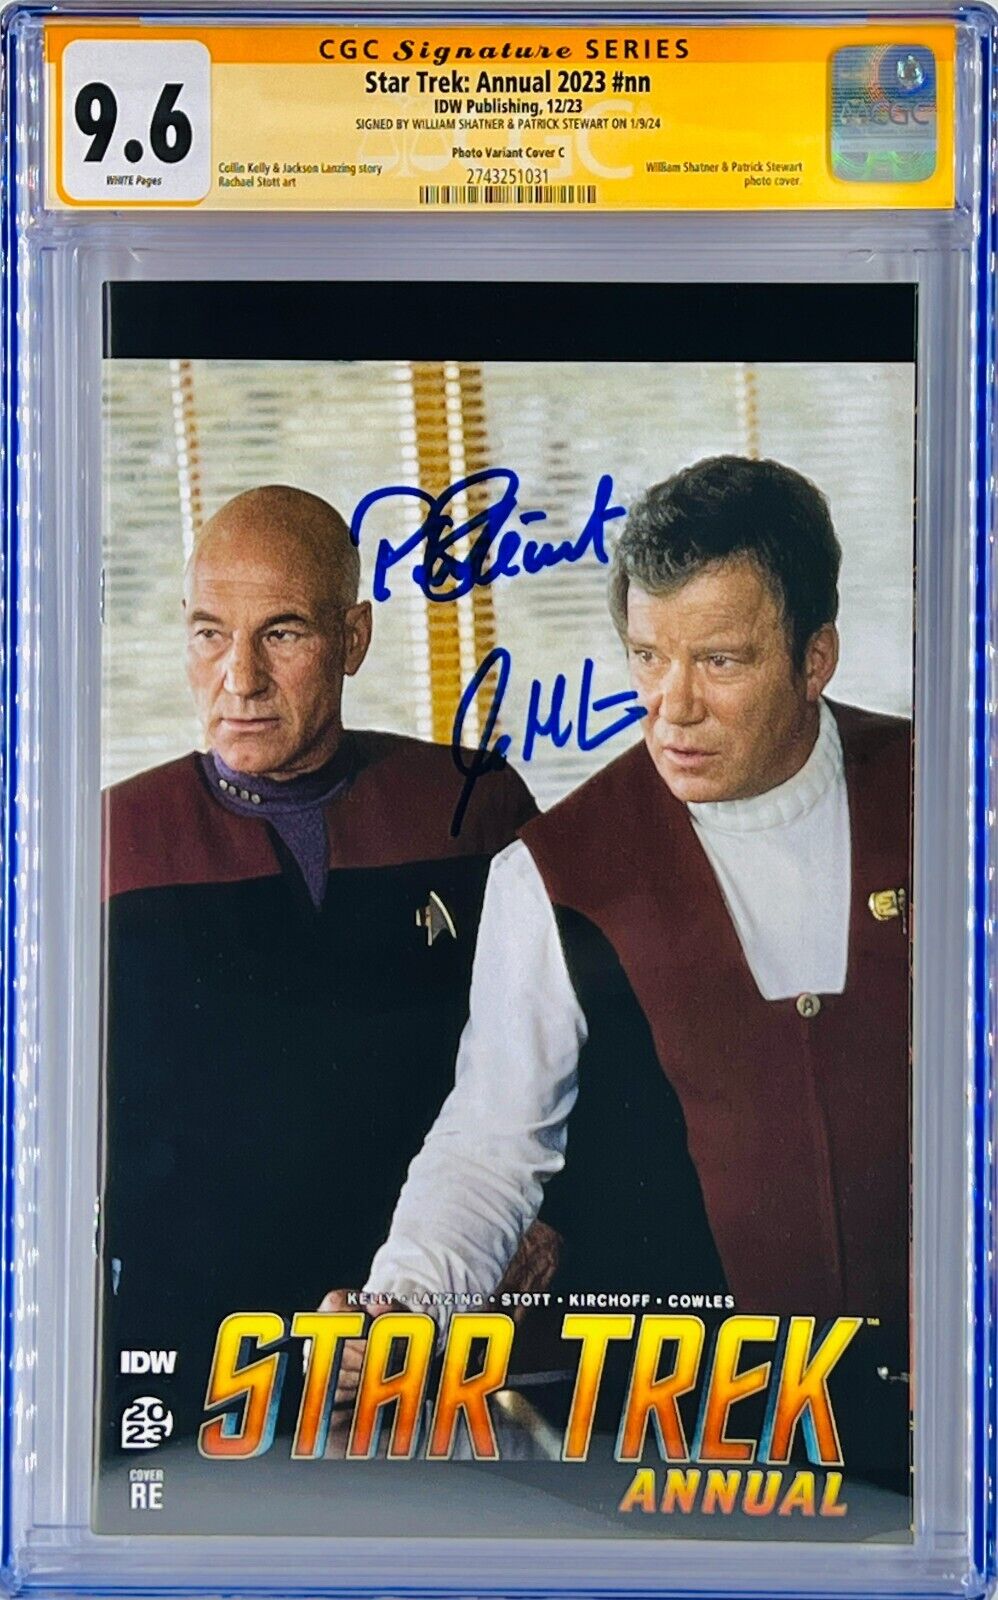 William Shatner Patrick Stewart Signed Photo Cover CGC SS Graded 9.6 Star Trek